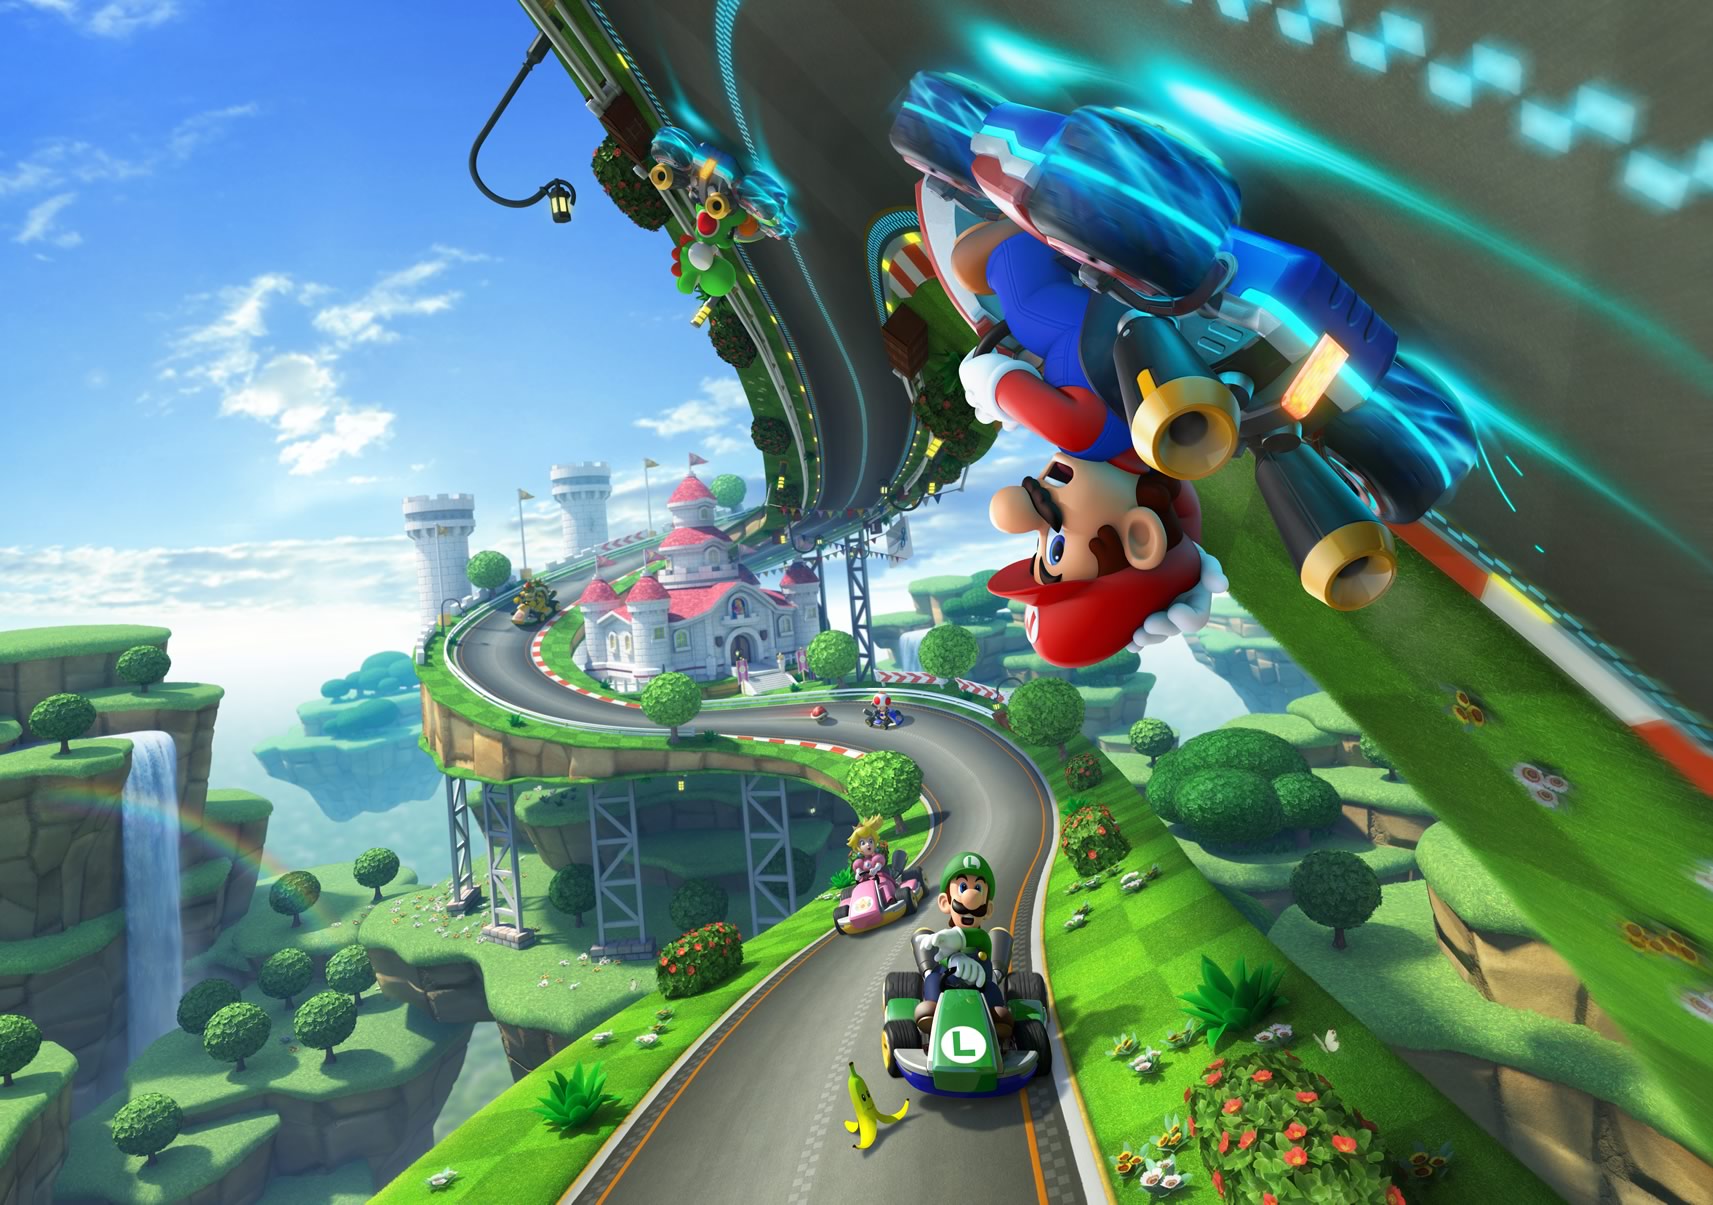 Mario Kart 8 Direct – Game Chat, Free Digital Game, Wii U Bundle, and more